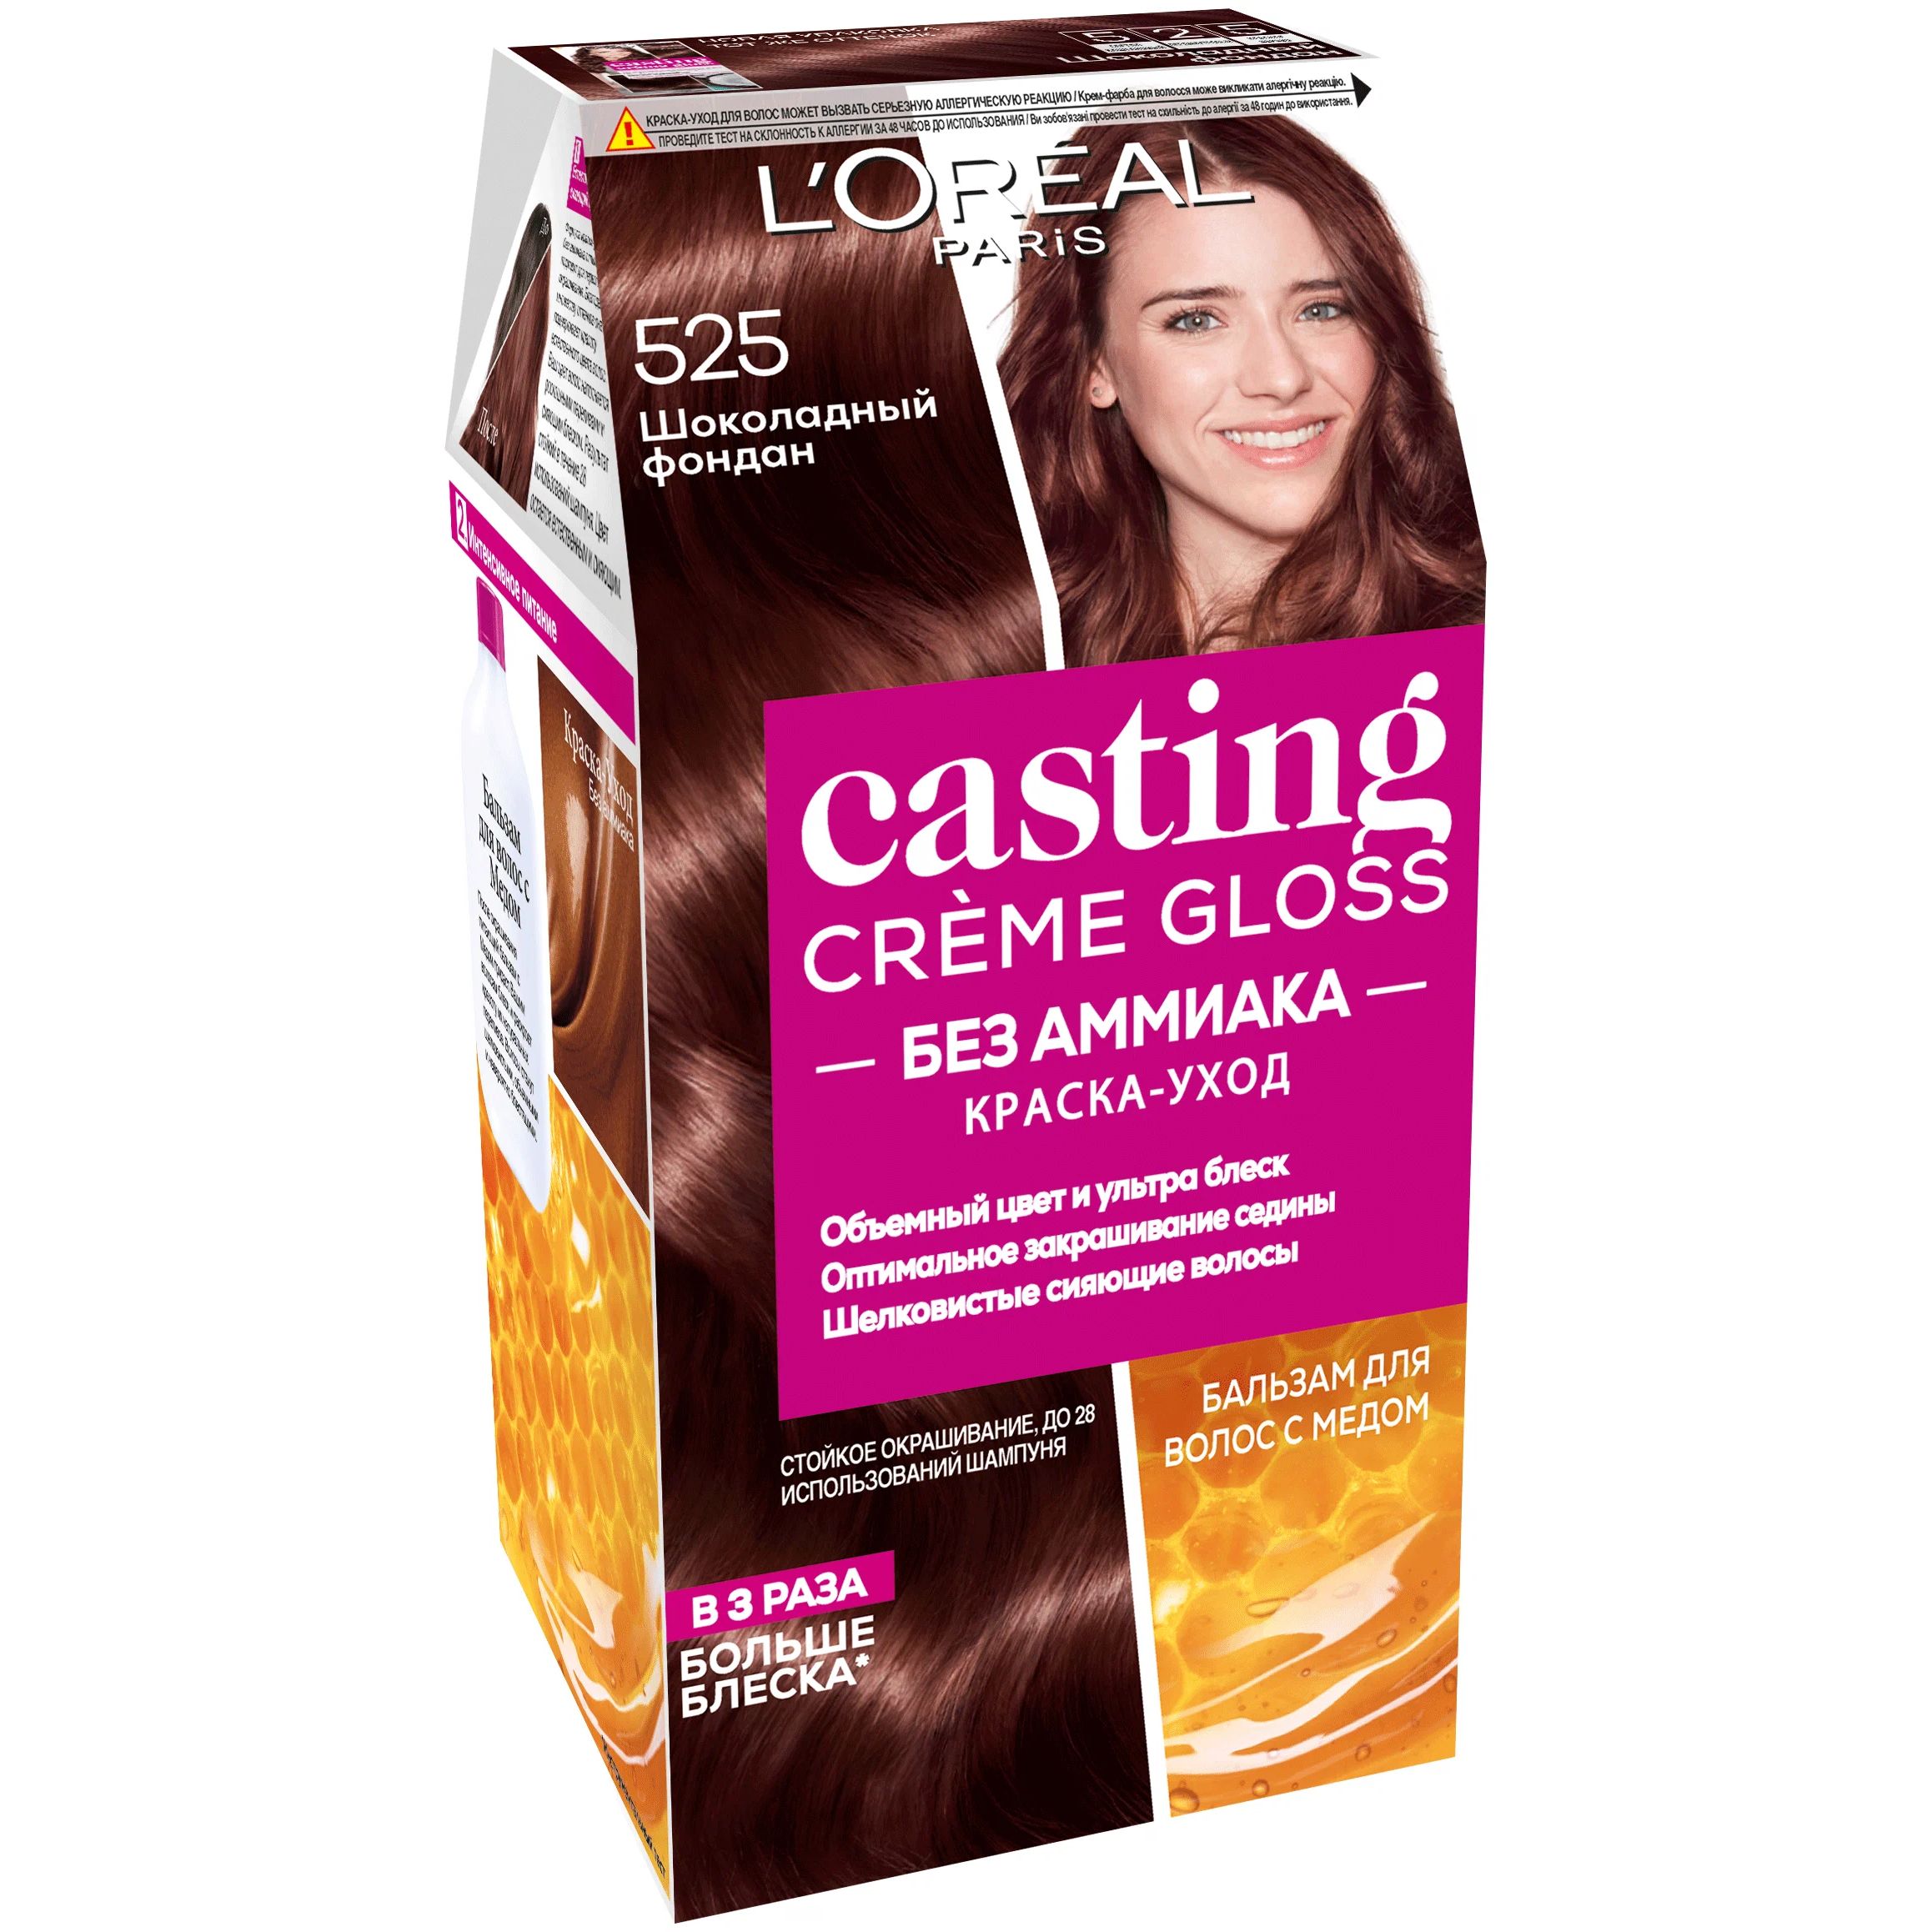 Краска-уход для волос L'Oreal Paris Casting Creme Gloss, 525 шоколадный фондан, 180 мл краска семи 5 35 светлый шоколадный шатен